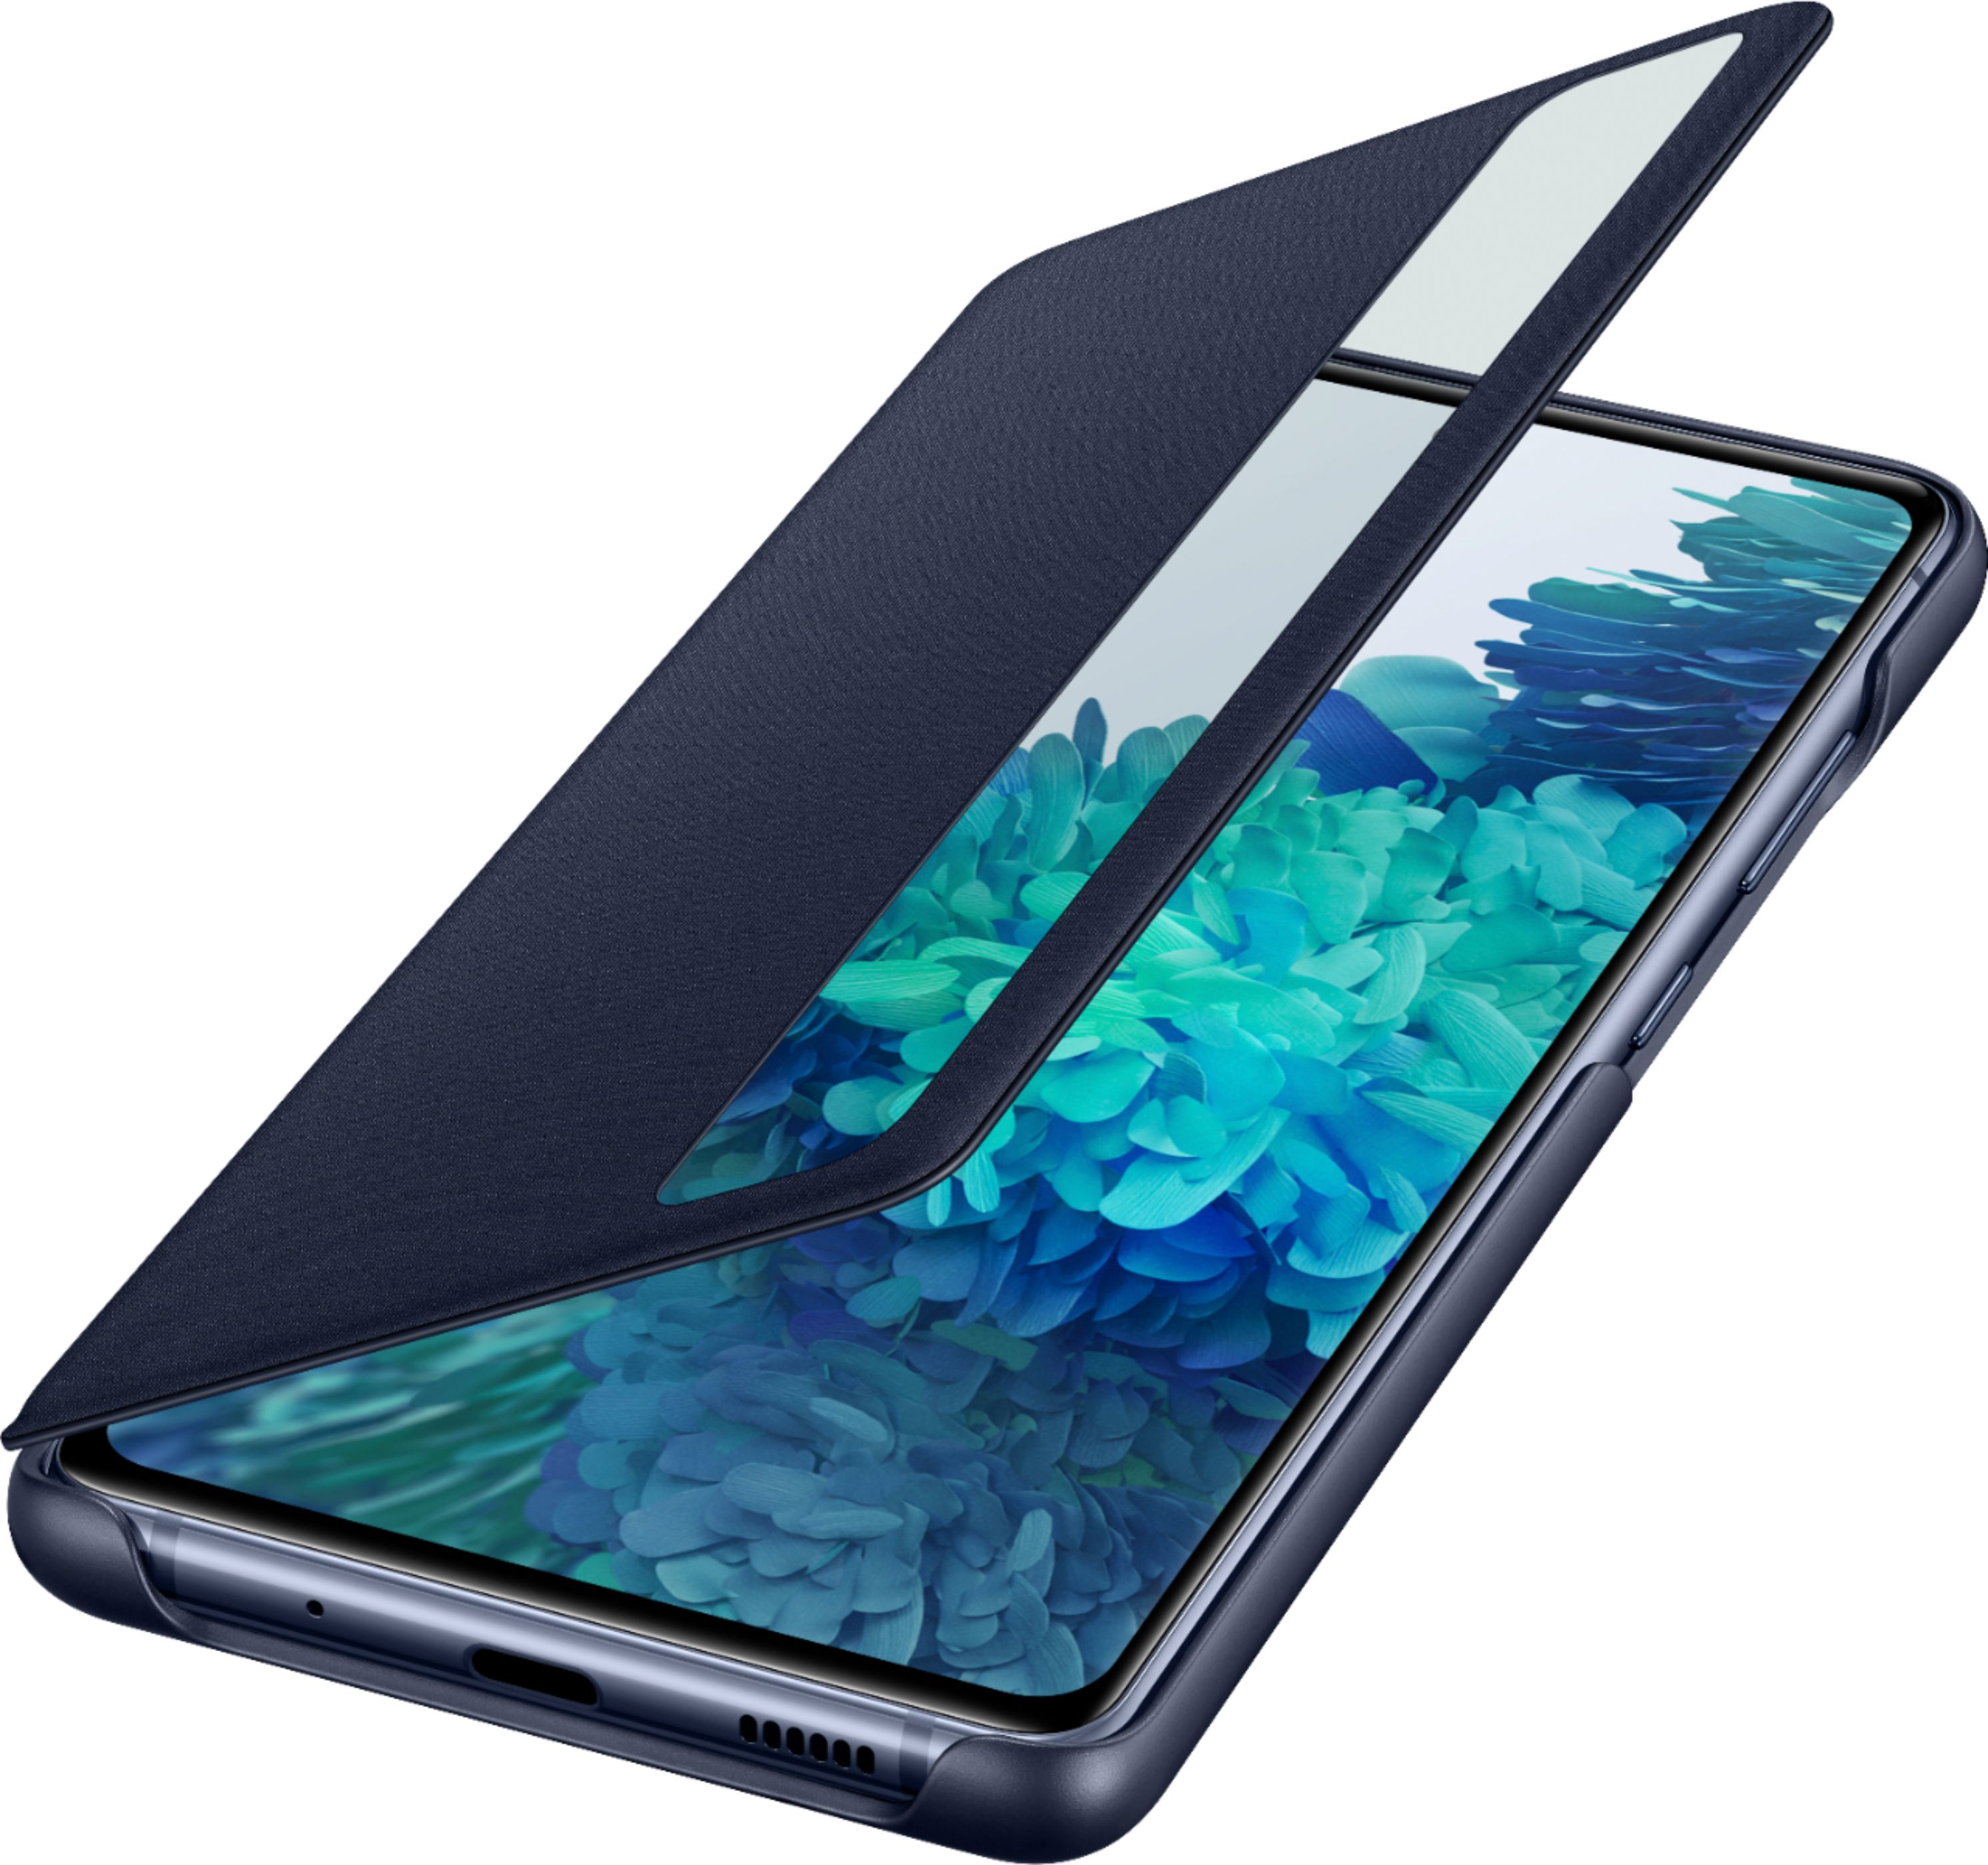 Samsung Funda Flip Cover S-view Para Galaxy S20 Plus